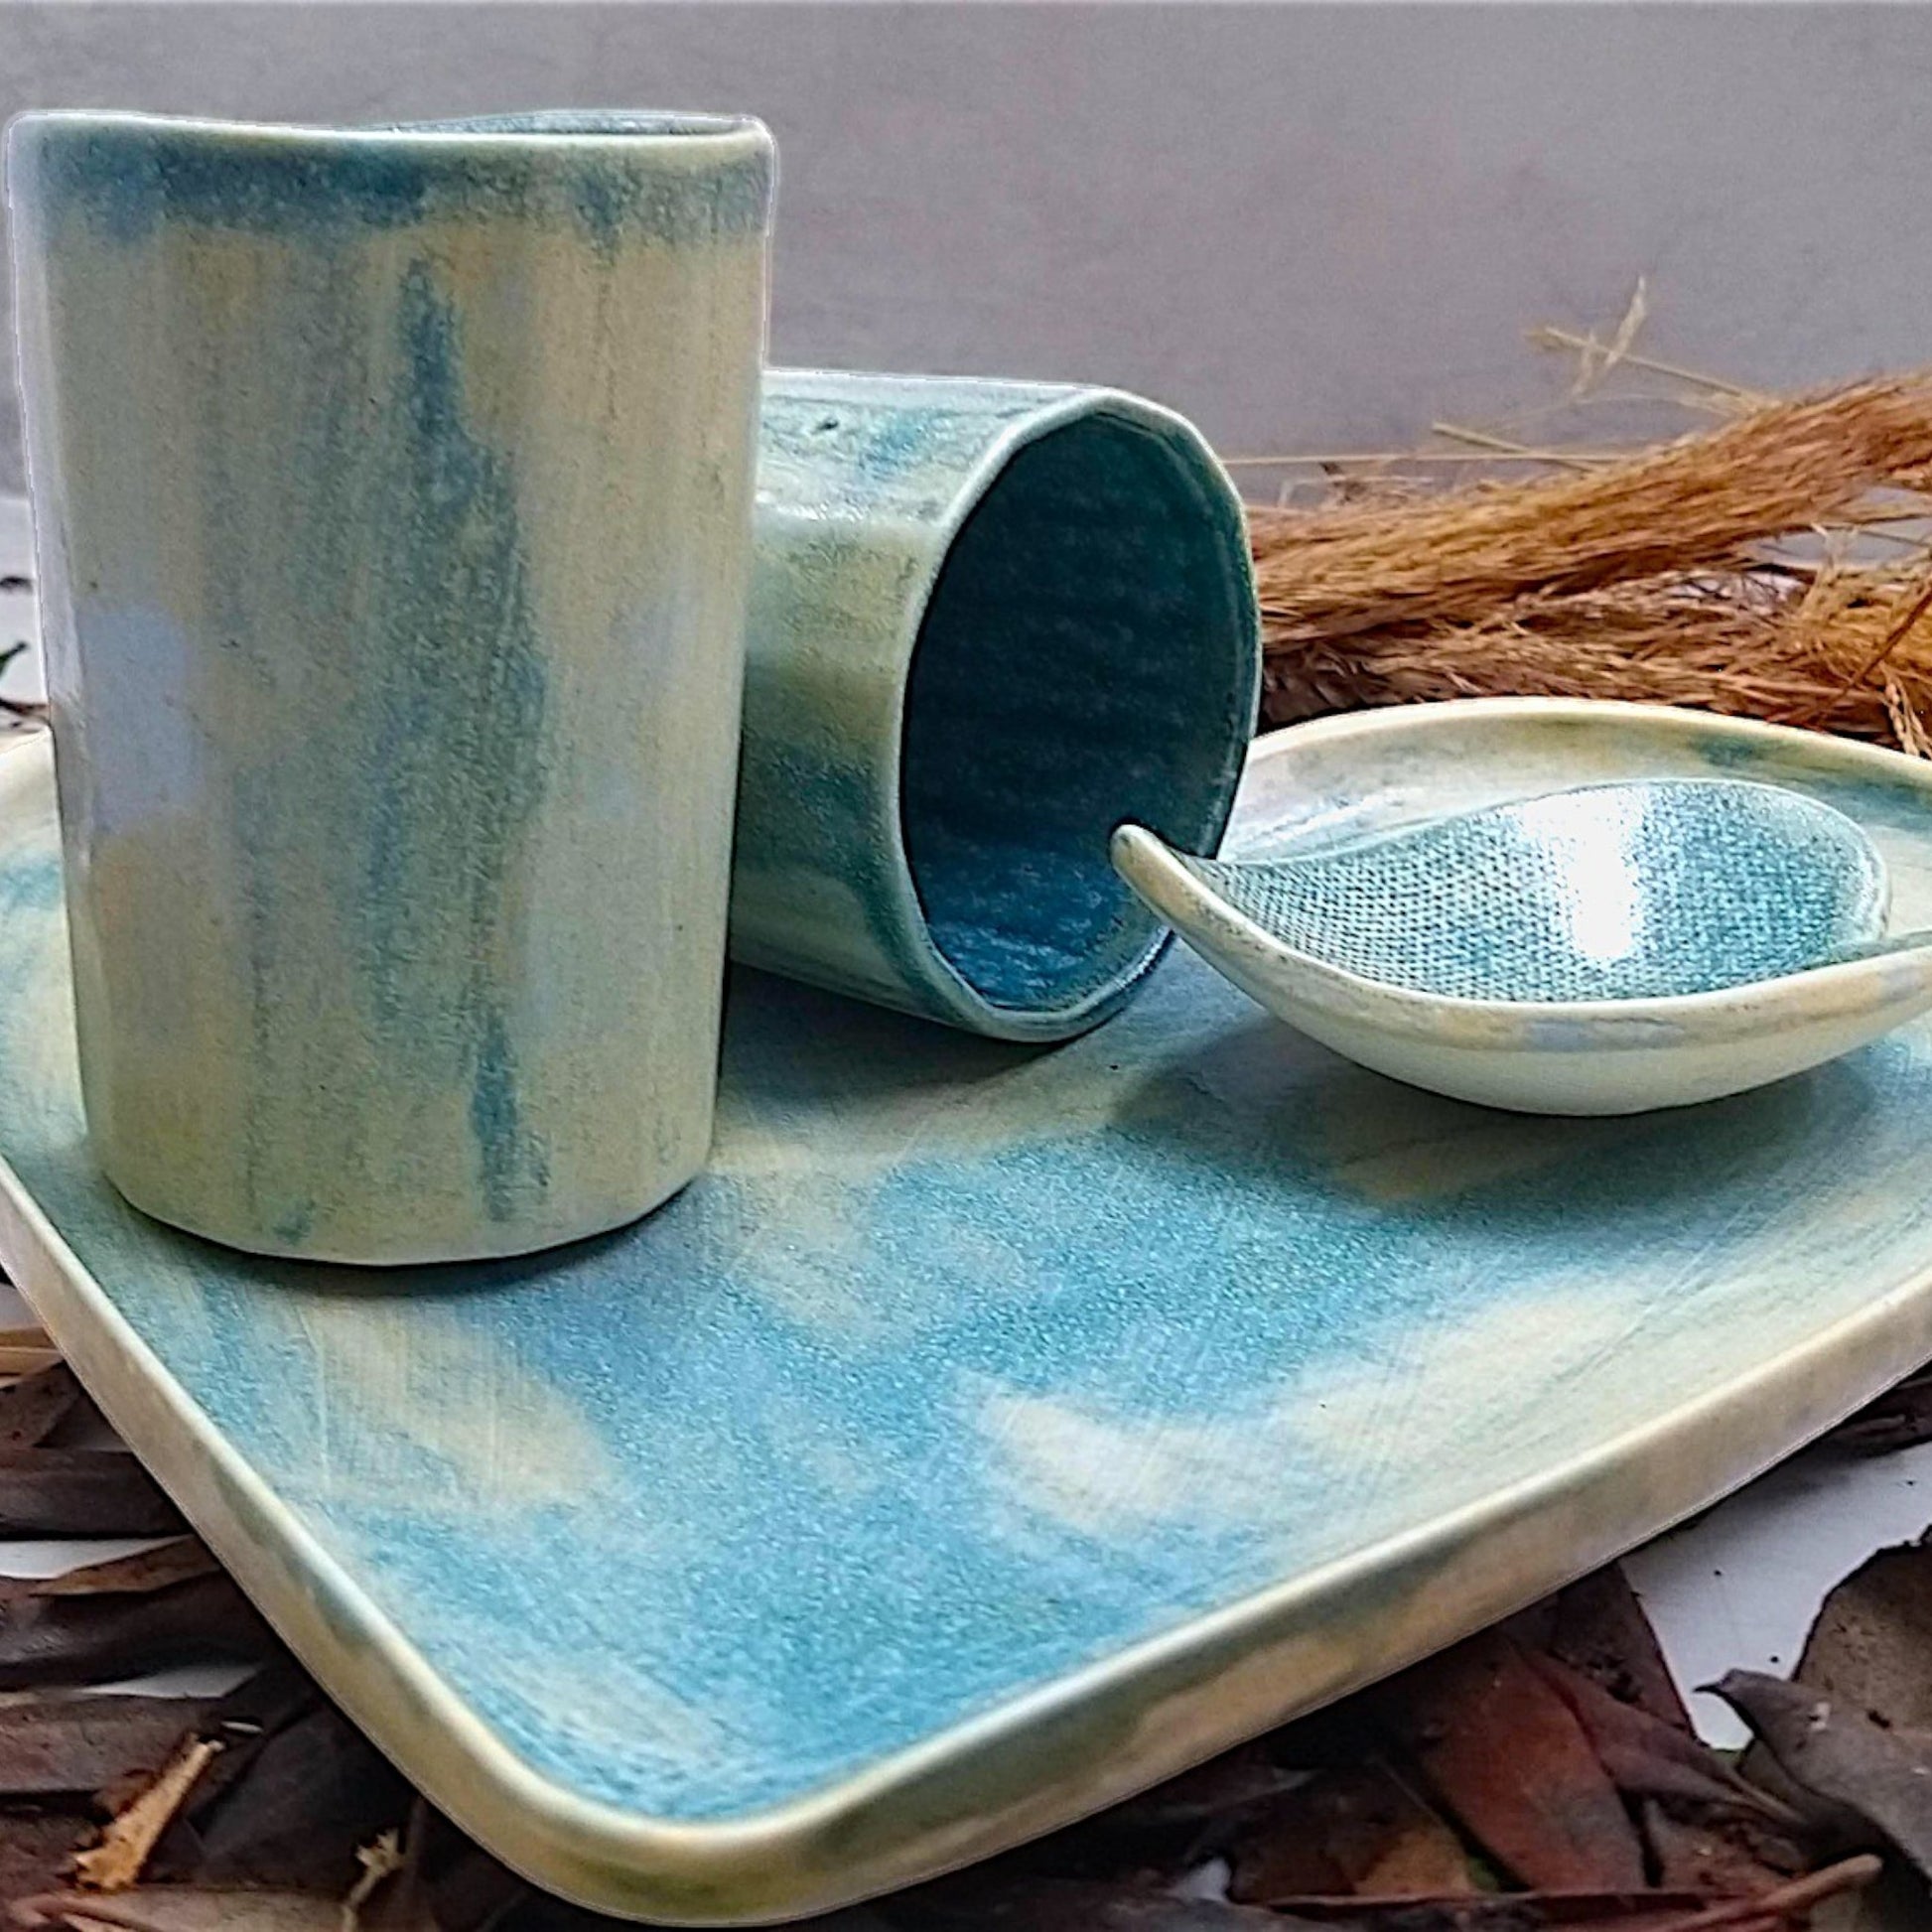 Romantic bluish yellow ceramic heart serving plate, glasses and bowl